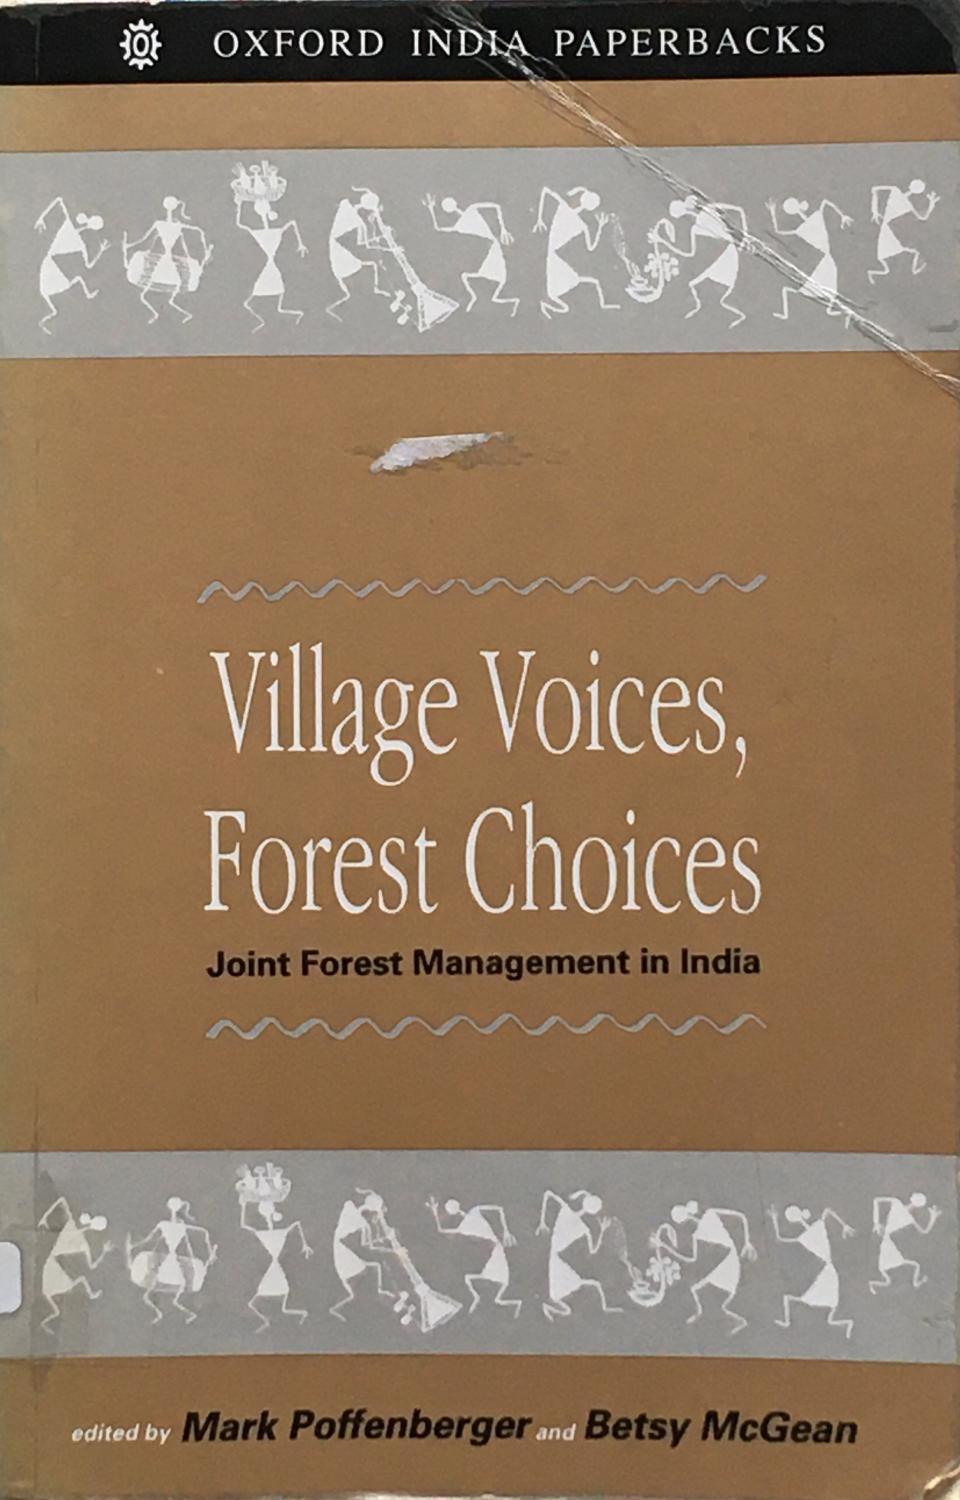 Village voices, village choices - Poffenberger, M. & McGean, B. (eds.)